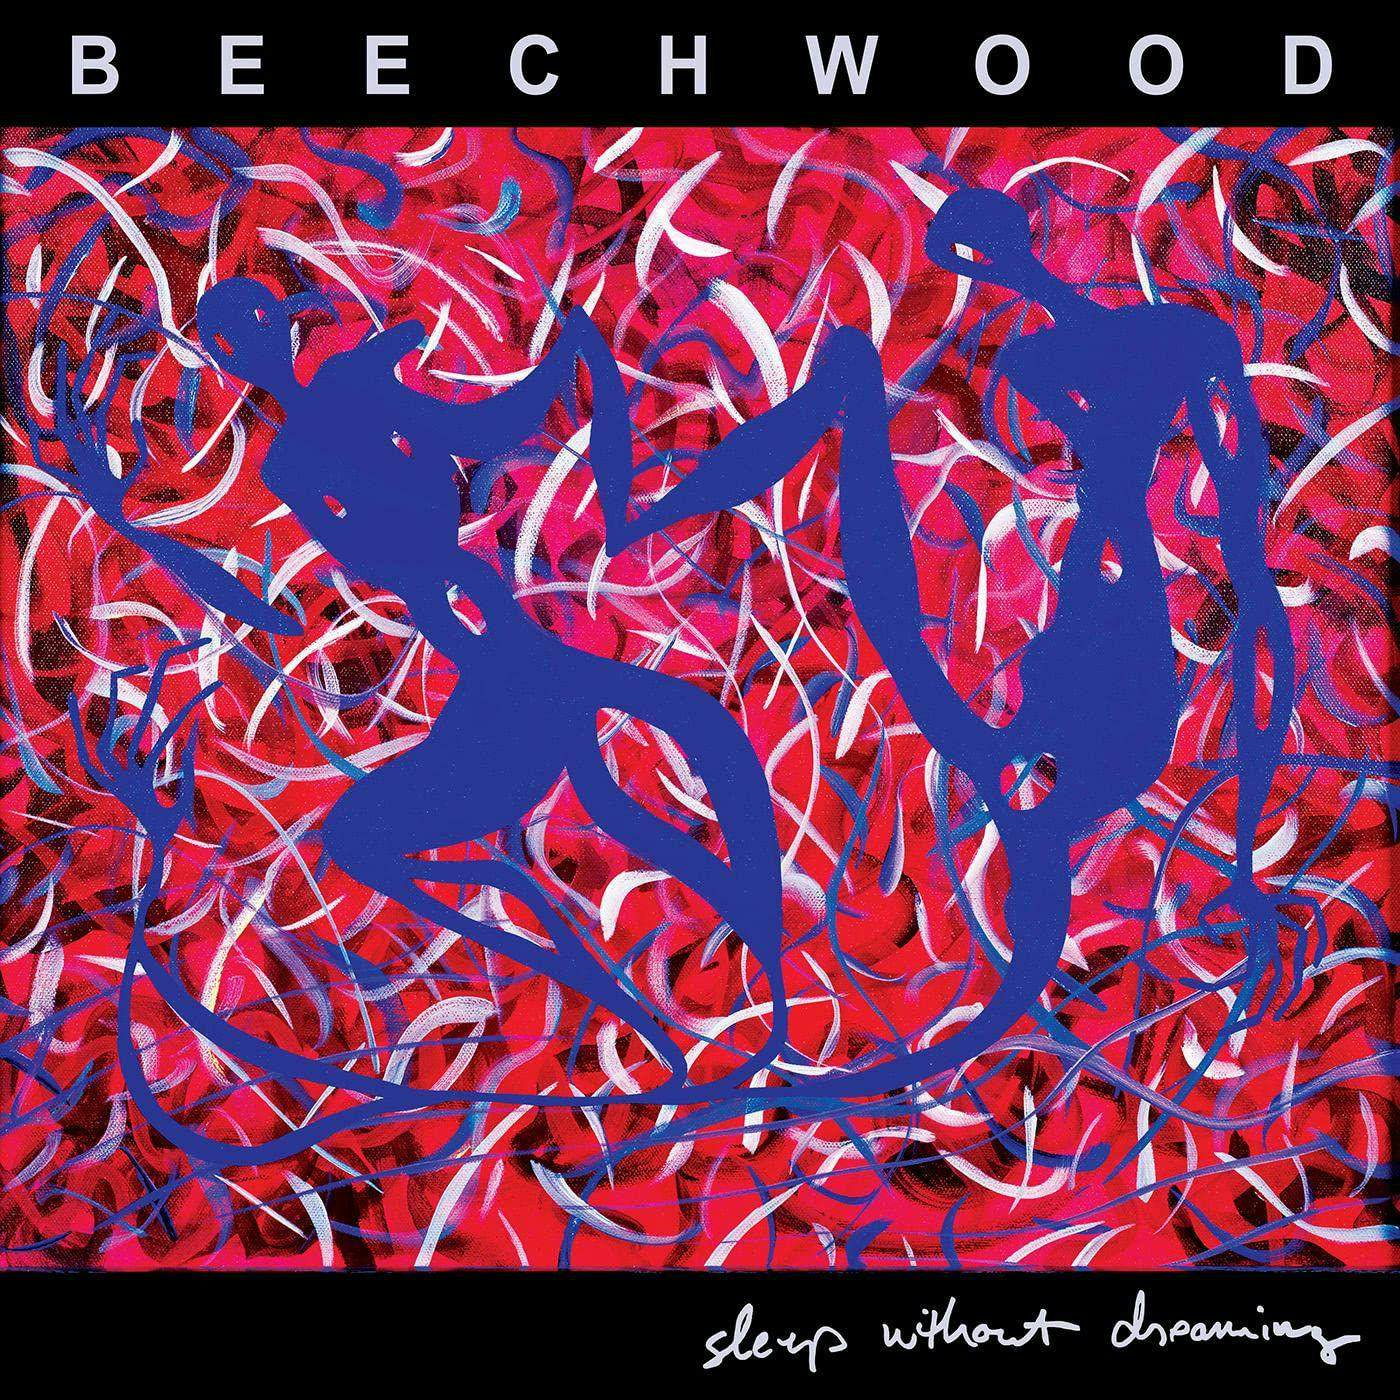 Beechwood Sleep Without Dreaming Vinyl Record